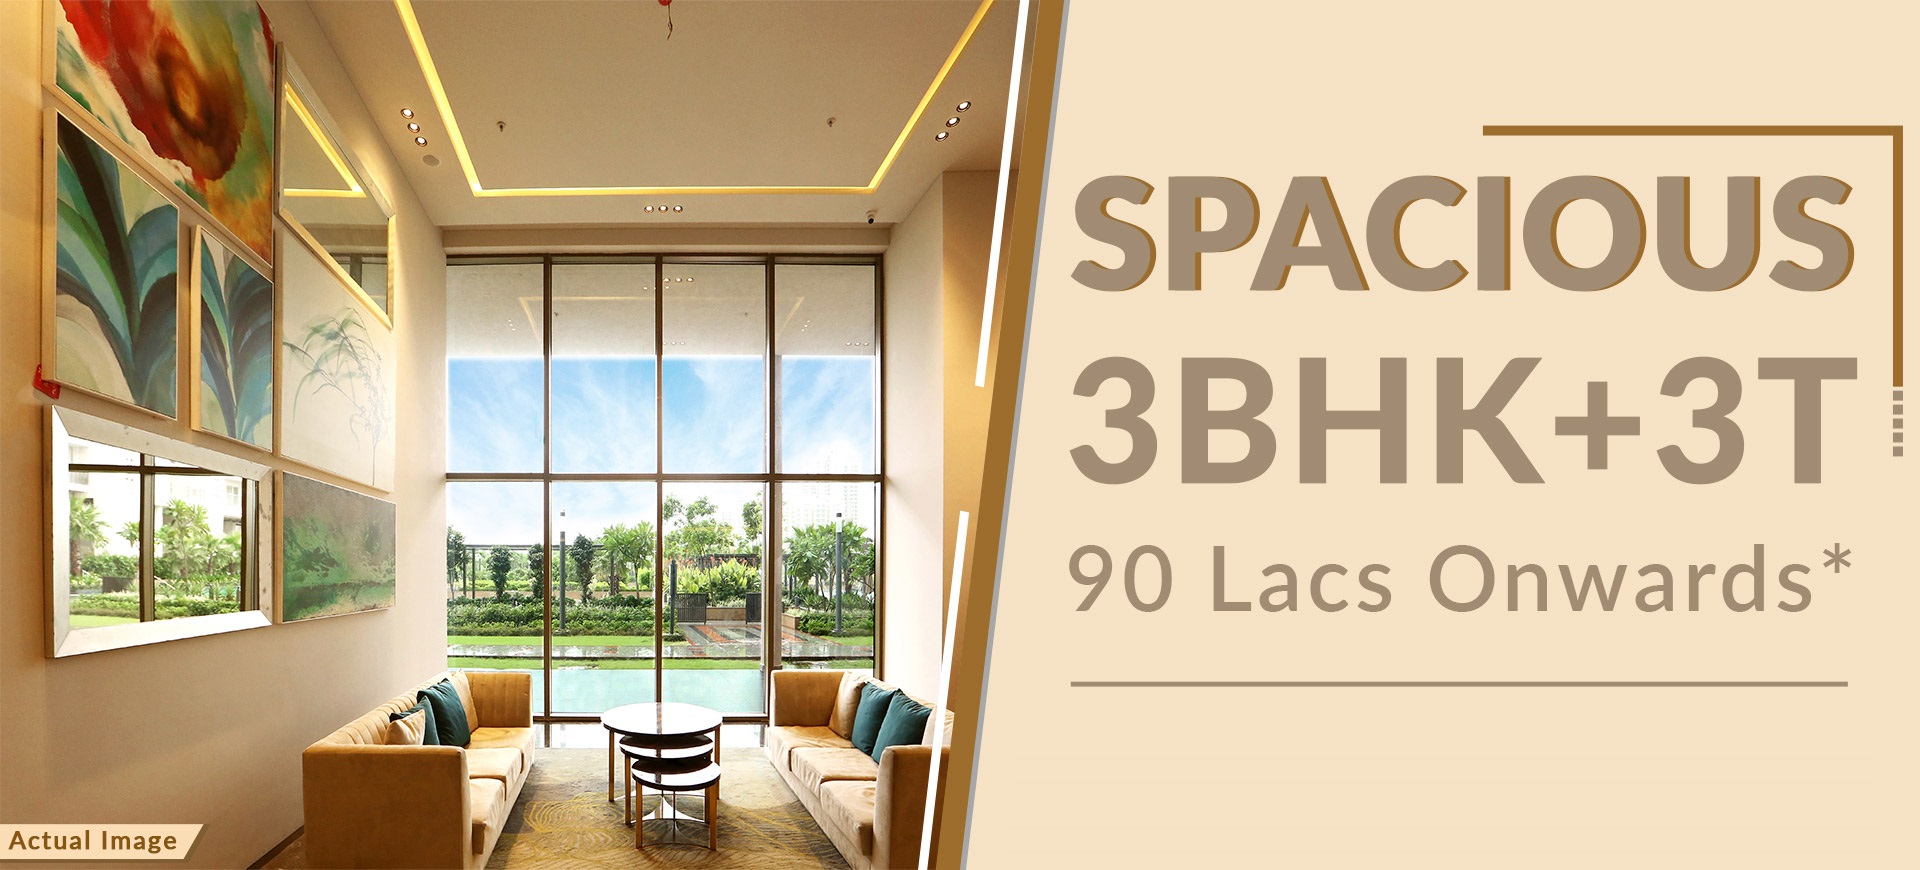 Spacious 3 BHK+3T price starting Rs  90 Lacs onwards at Mapsko Mount Ville, Gurgaon Update